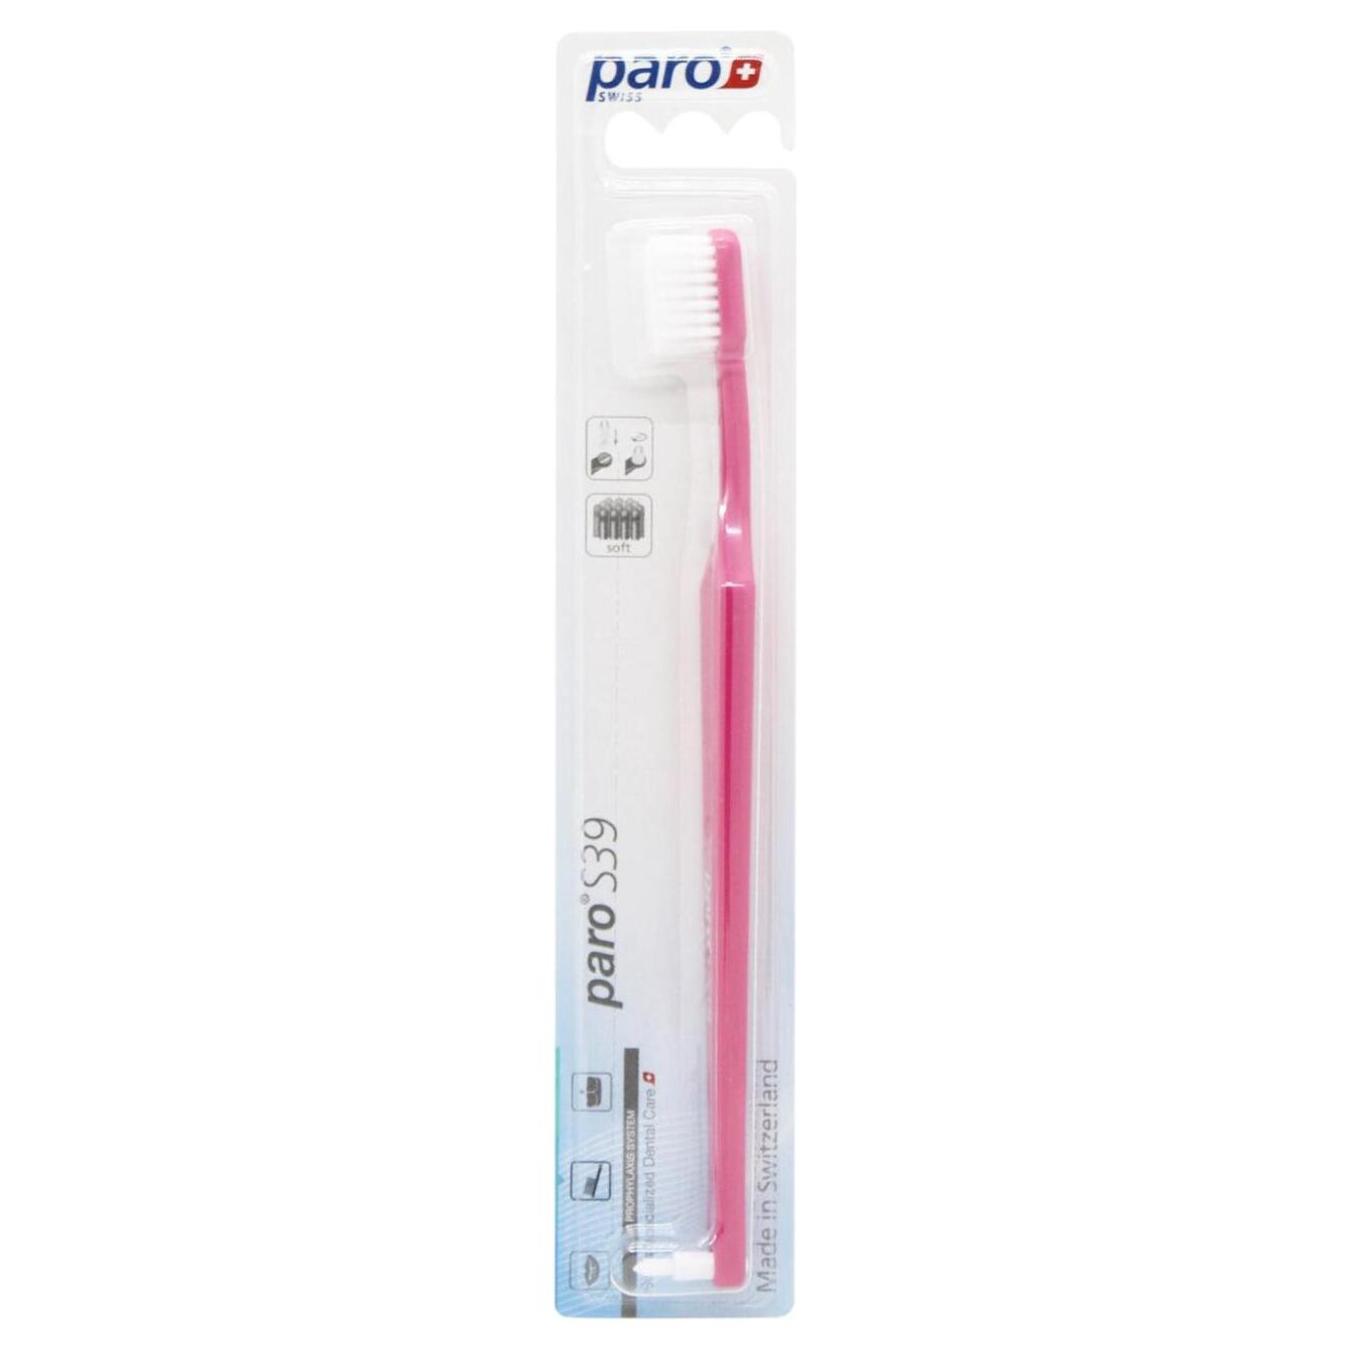 Toothbrush Paro soft 39 bundles of bristles 5 rows with a monobundle nozzle pink